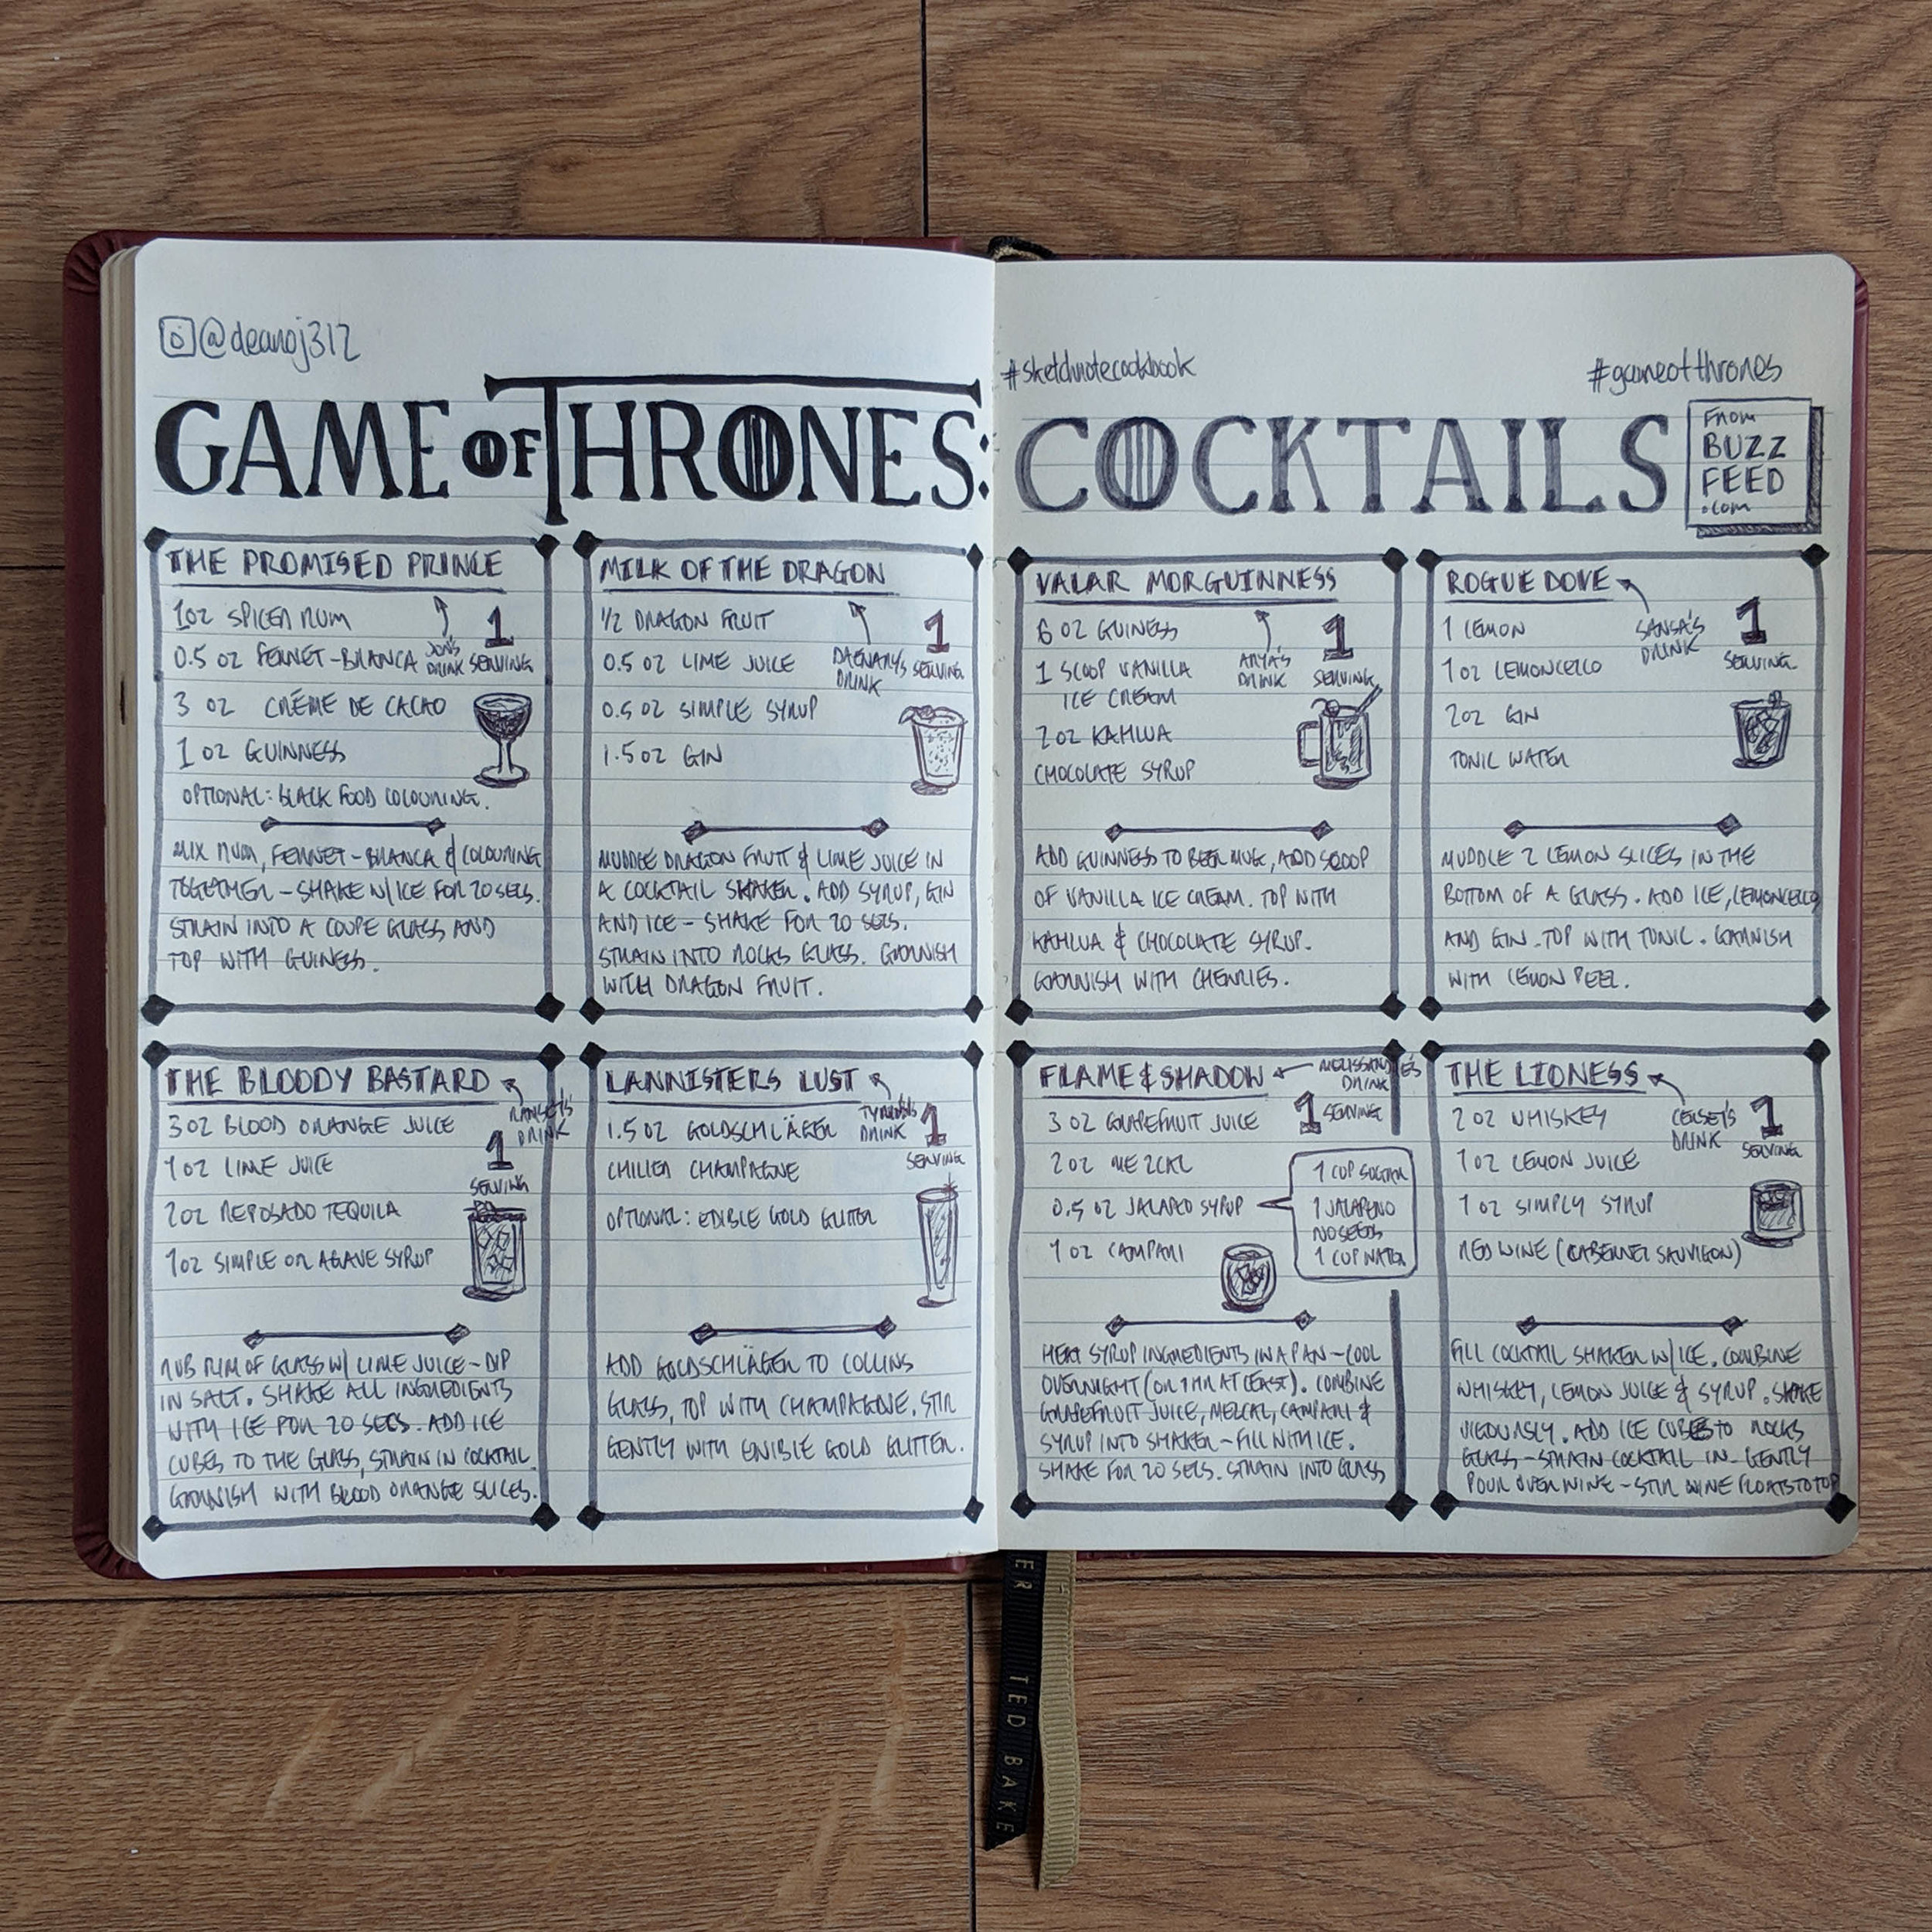 GameofThrones-Cocktails1.jpg